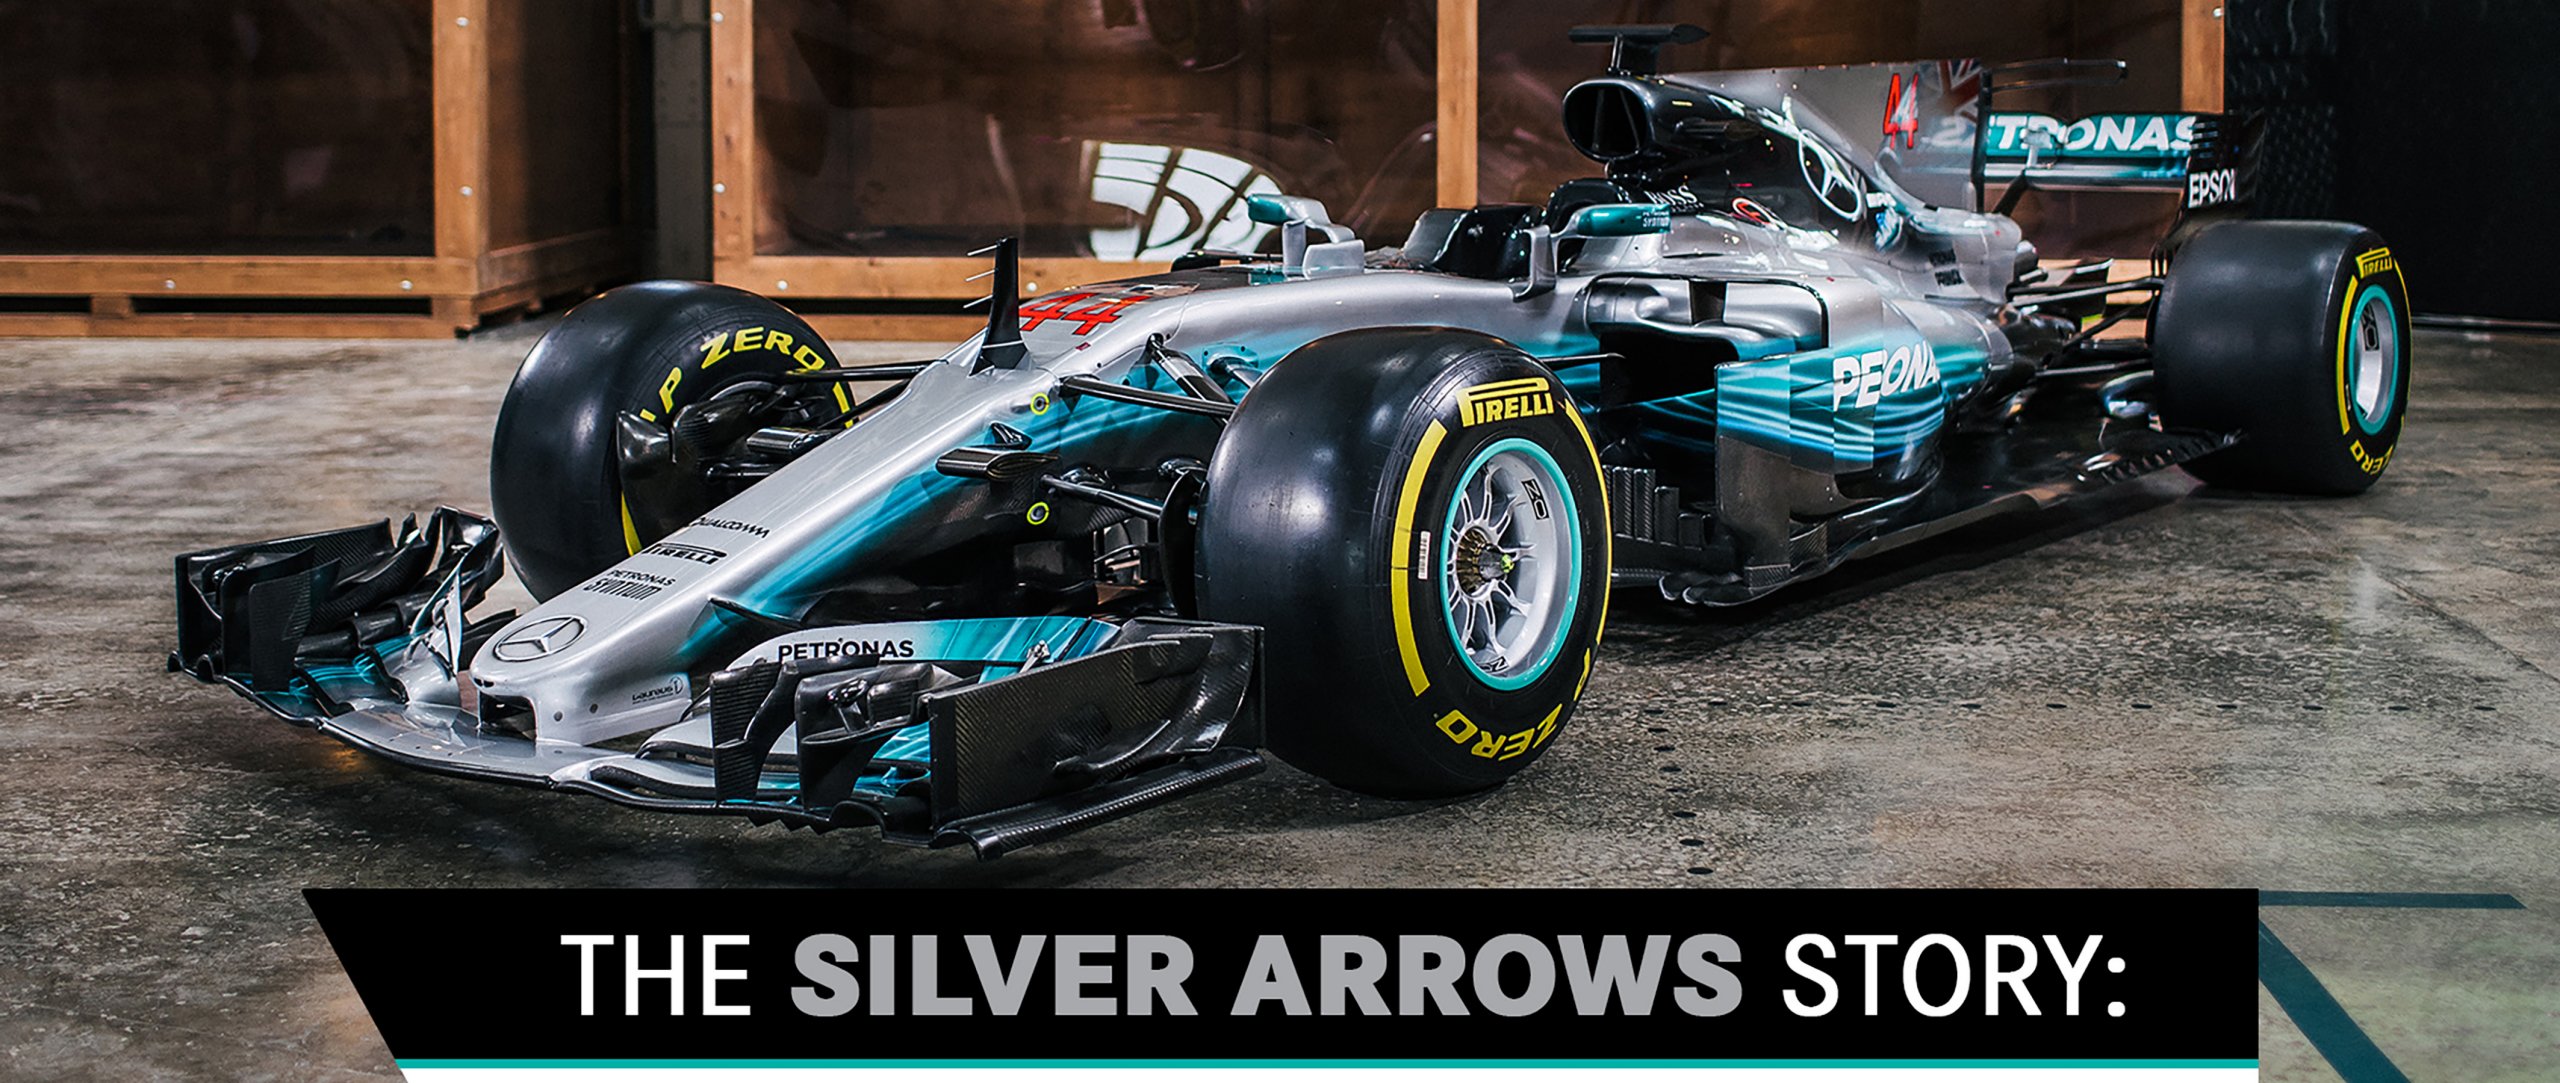 The Silver Arrows Story: Mercedes W08 - Mercedes-AMG PETRONAS F1 Team